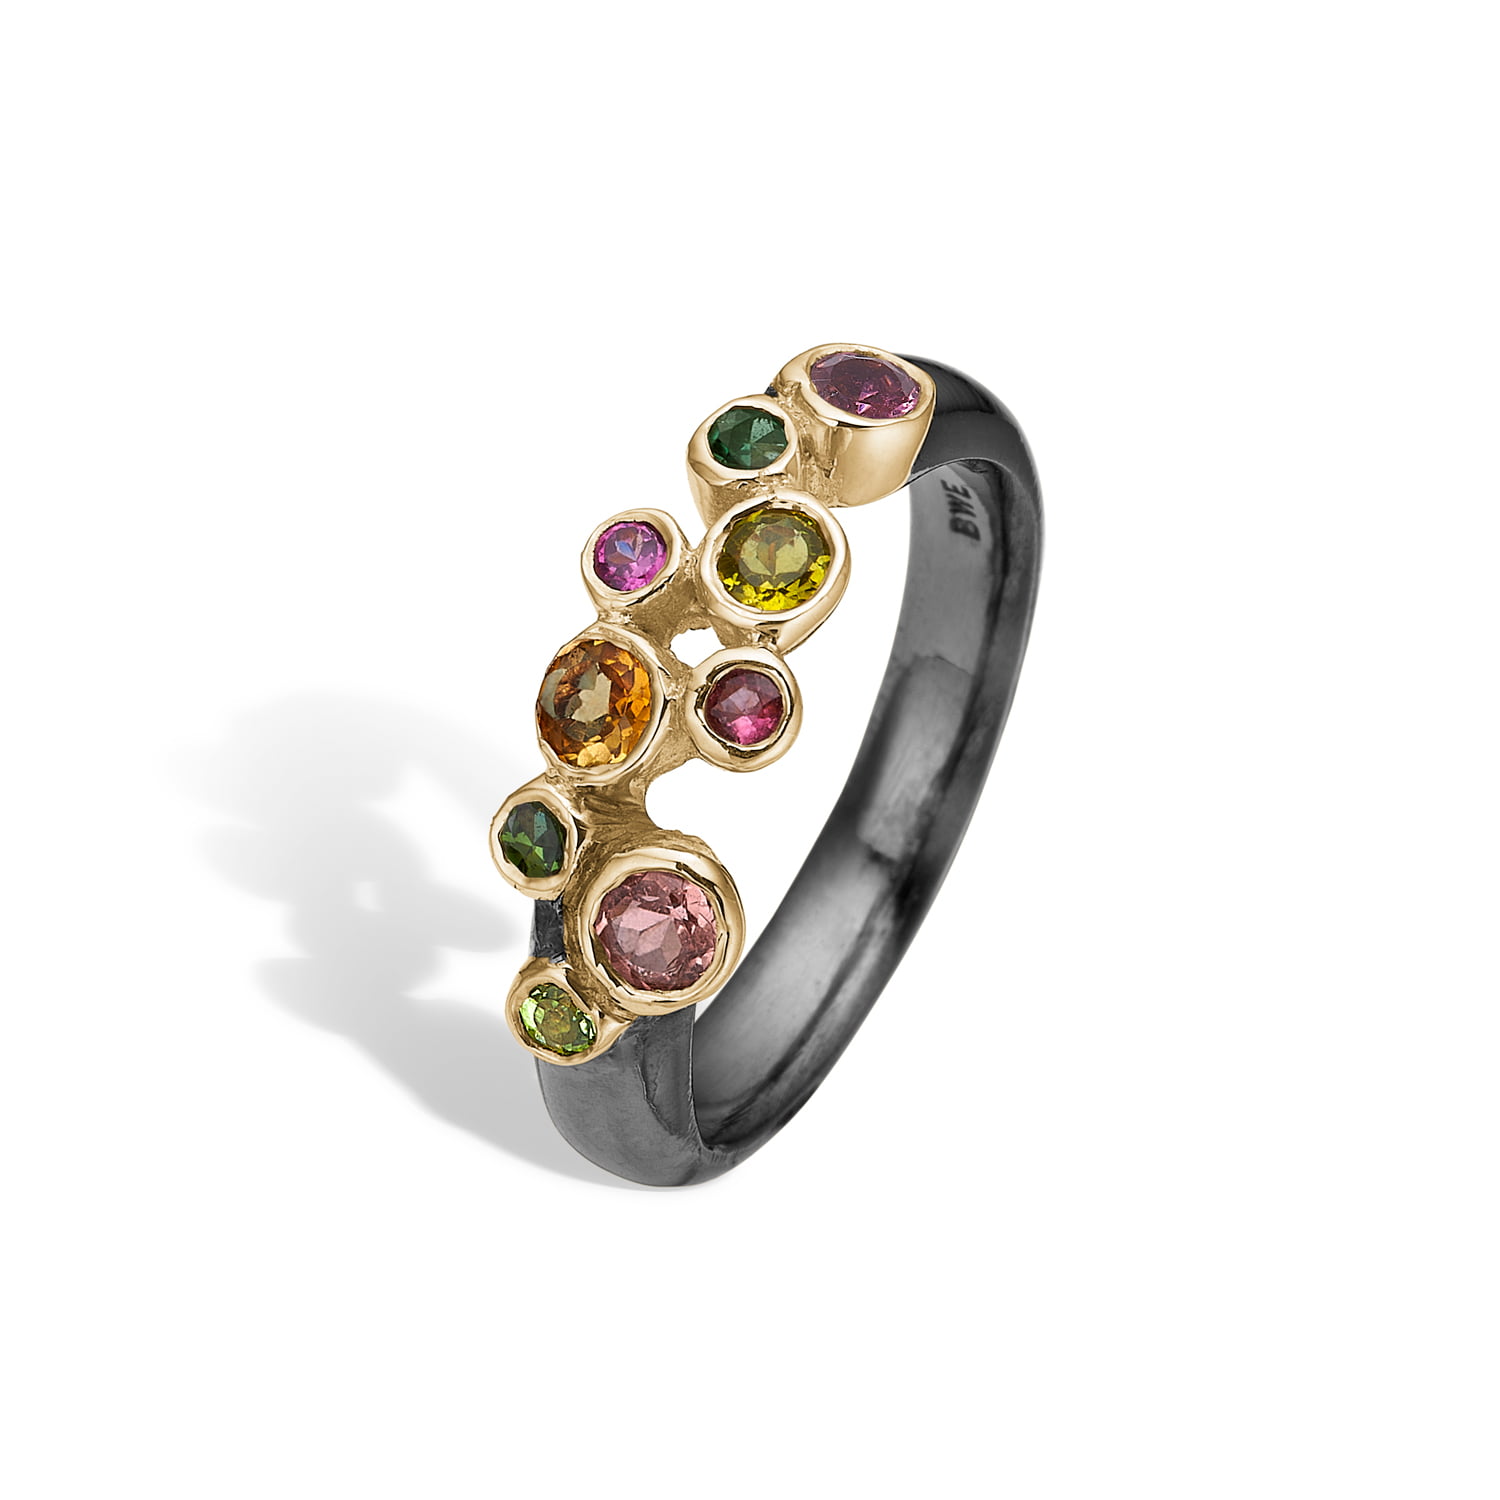 monet 9 ring med sten i flere farver orange, gul, lilla, pink, gul, grøn